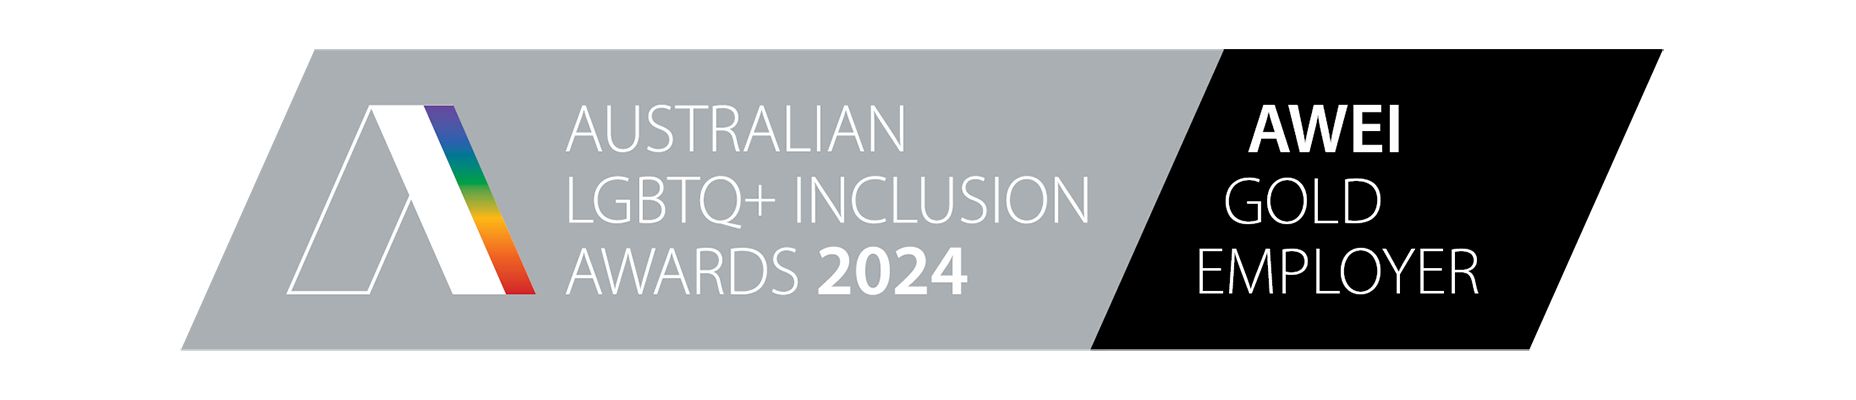 Australian LGBTQ+ Inclusion Awards 2024 – AWEI Gold Employer badge